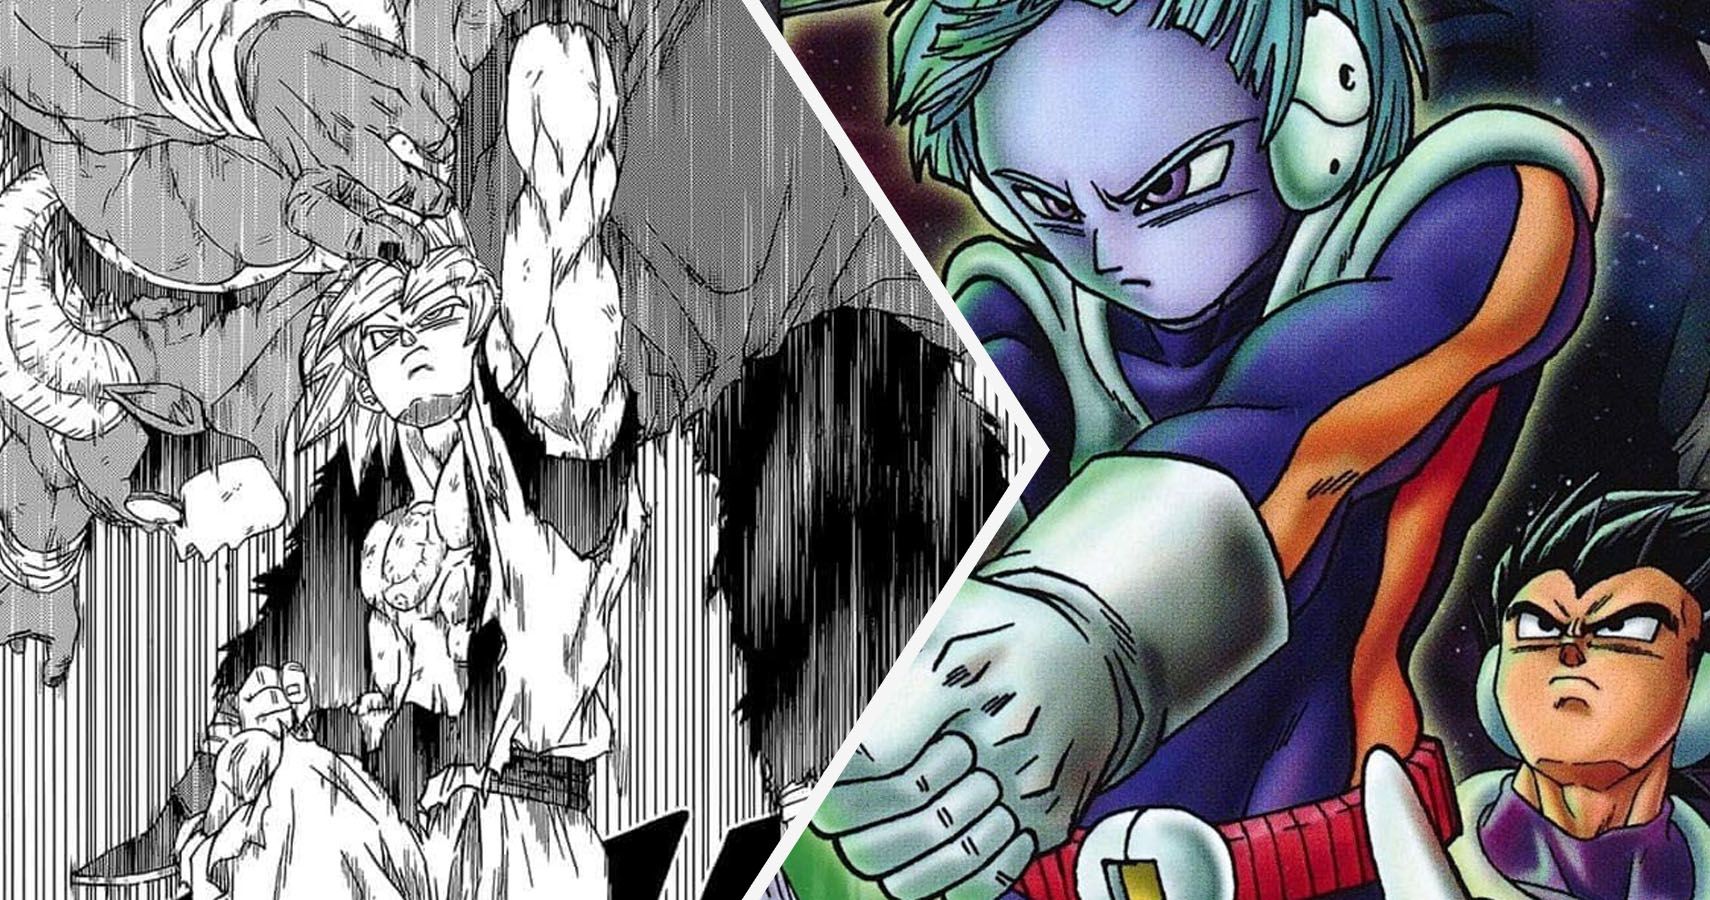 Goku vs Moro and Galactic Patrolman Merus with Vegeta